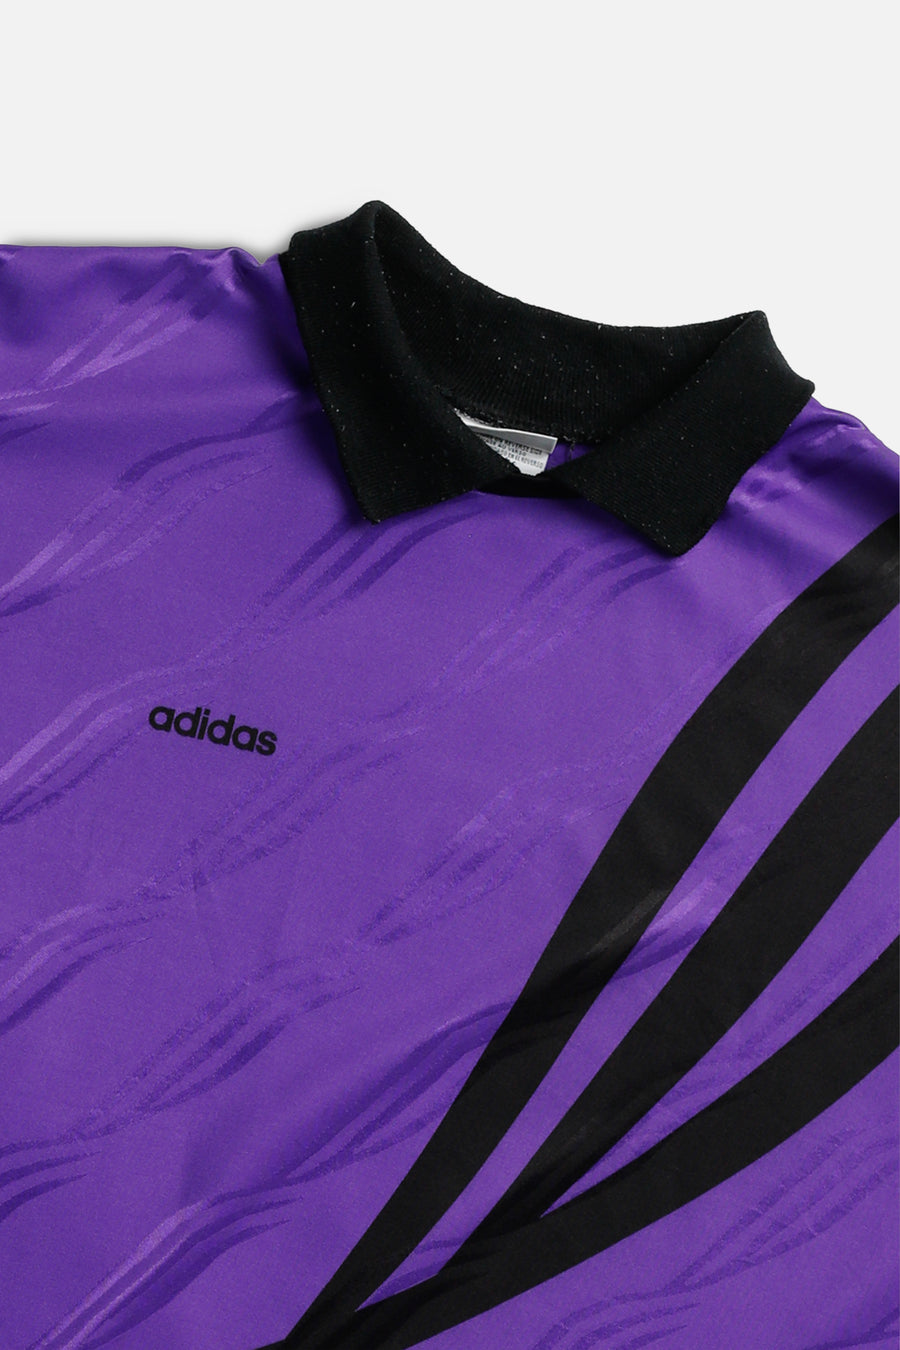 Vintage Adidas Soccer Jersey - XL